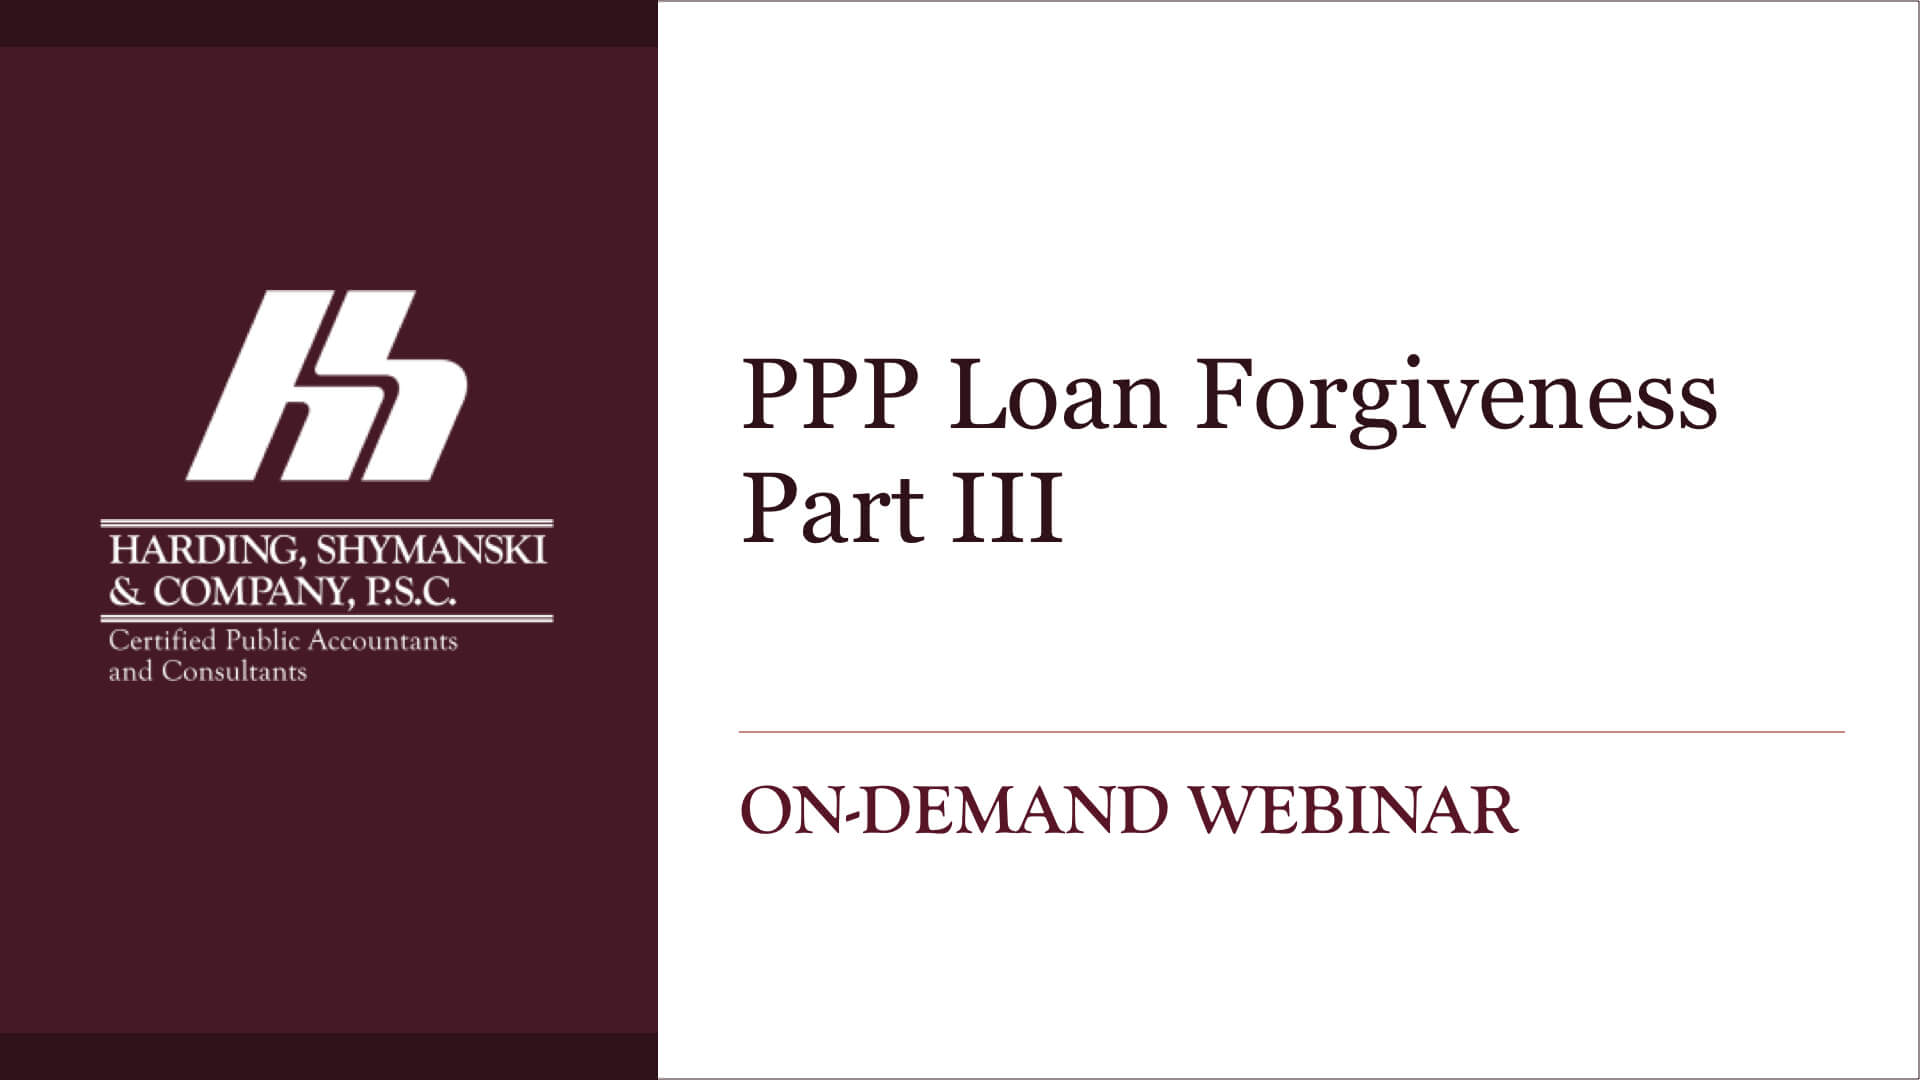 PPP Loan Forgiveness Part III